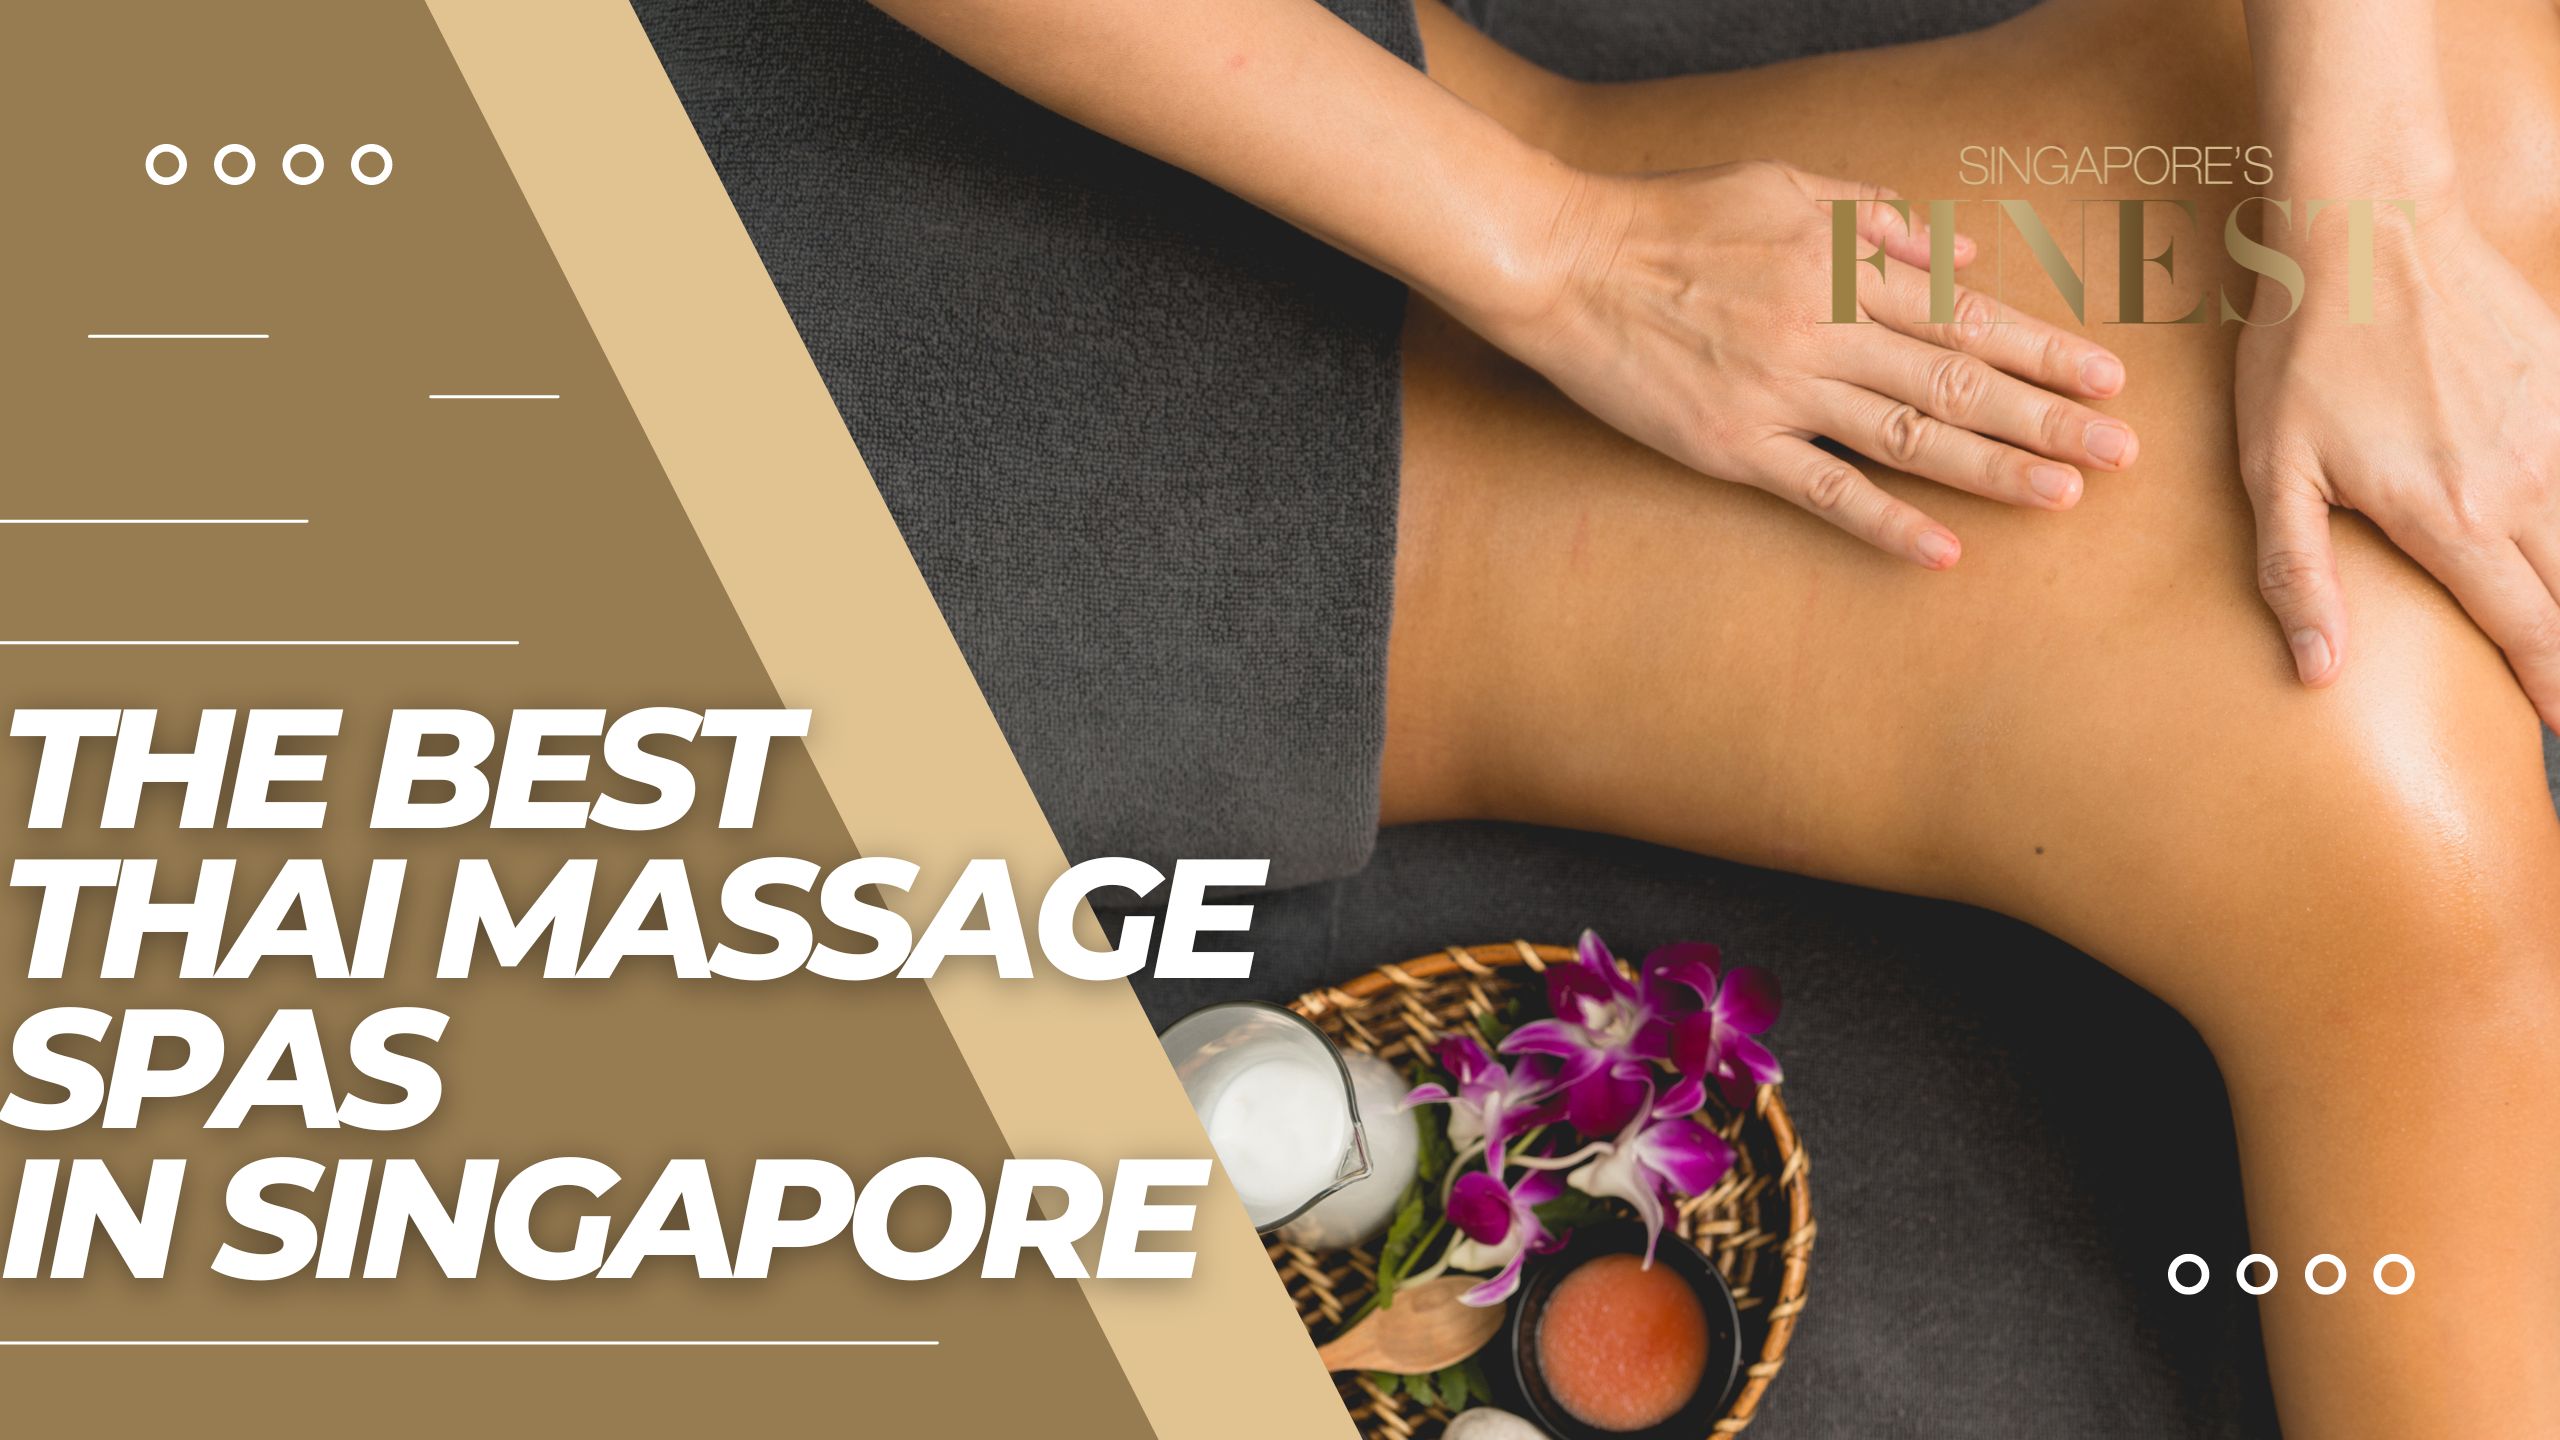 The Finest Thai Massage Spas in Singapore